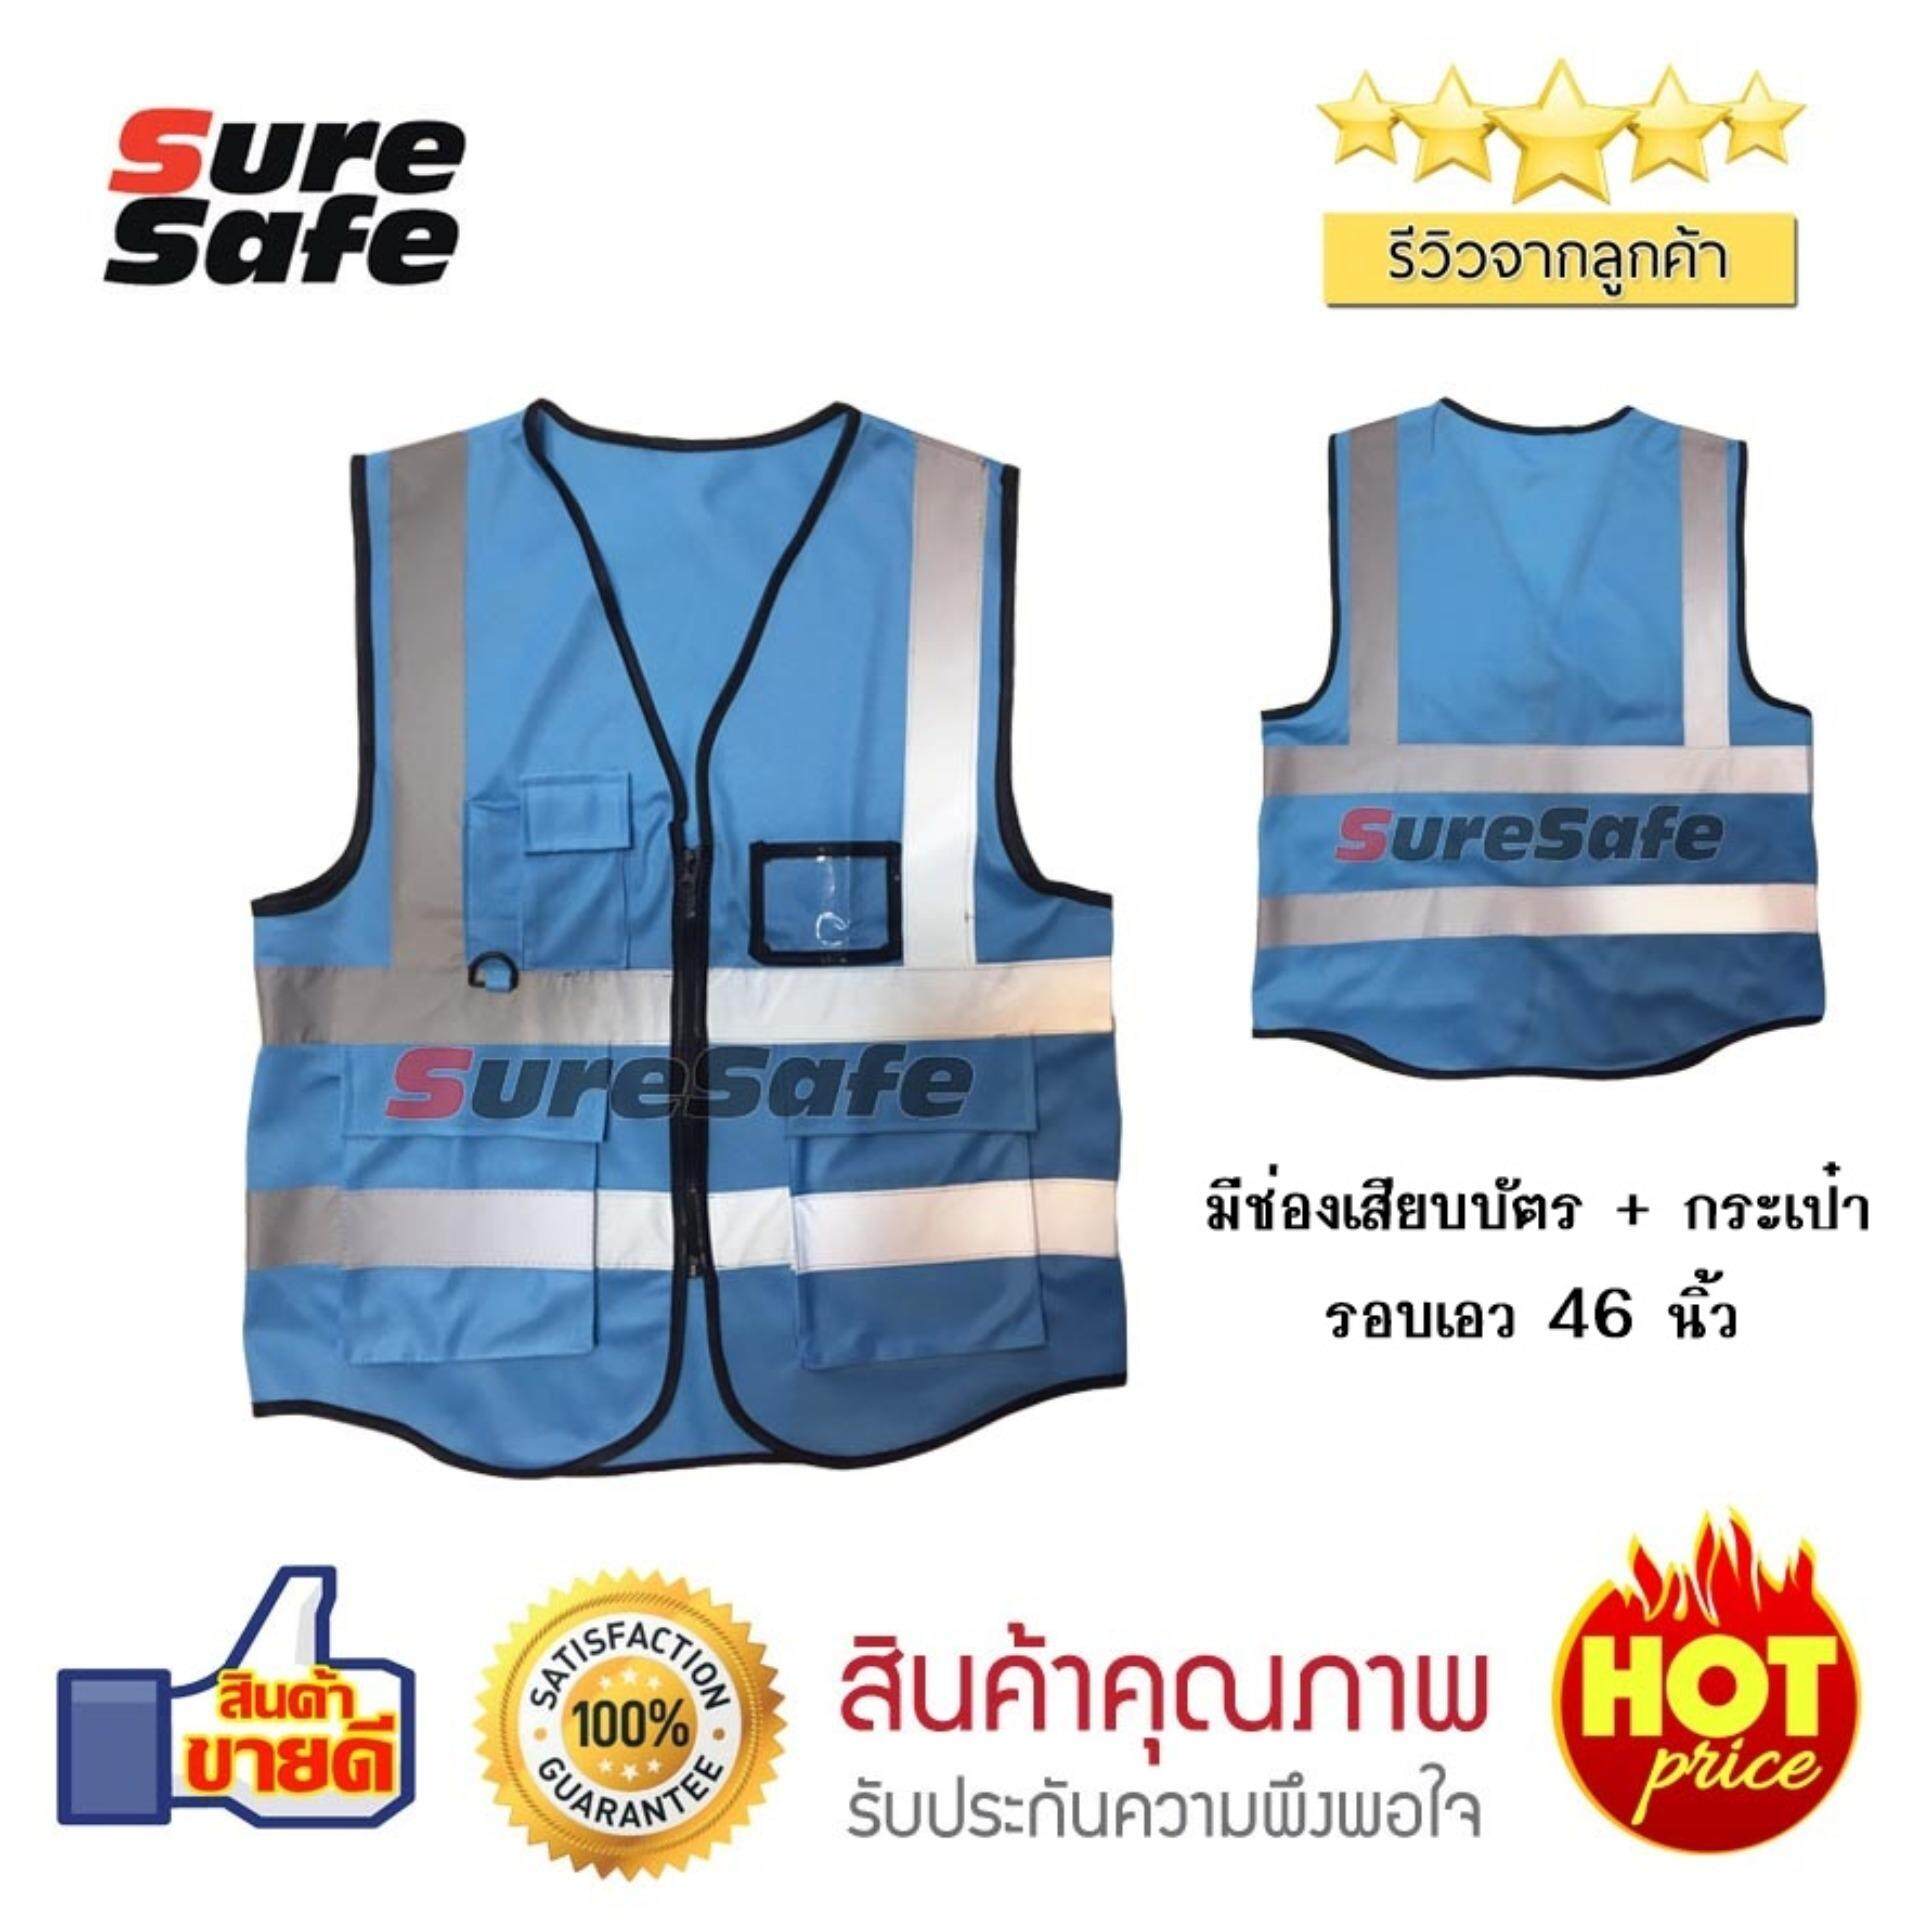 Suresafe Safety Vest เสื้อสะท้อนแสงรุ่นเต็มตัว สีฟ้า มีช่องเสียบบัตรและปากกา